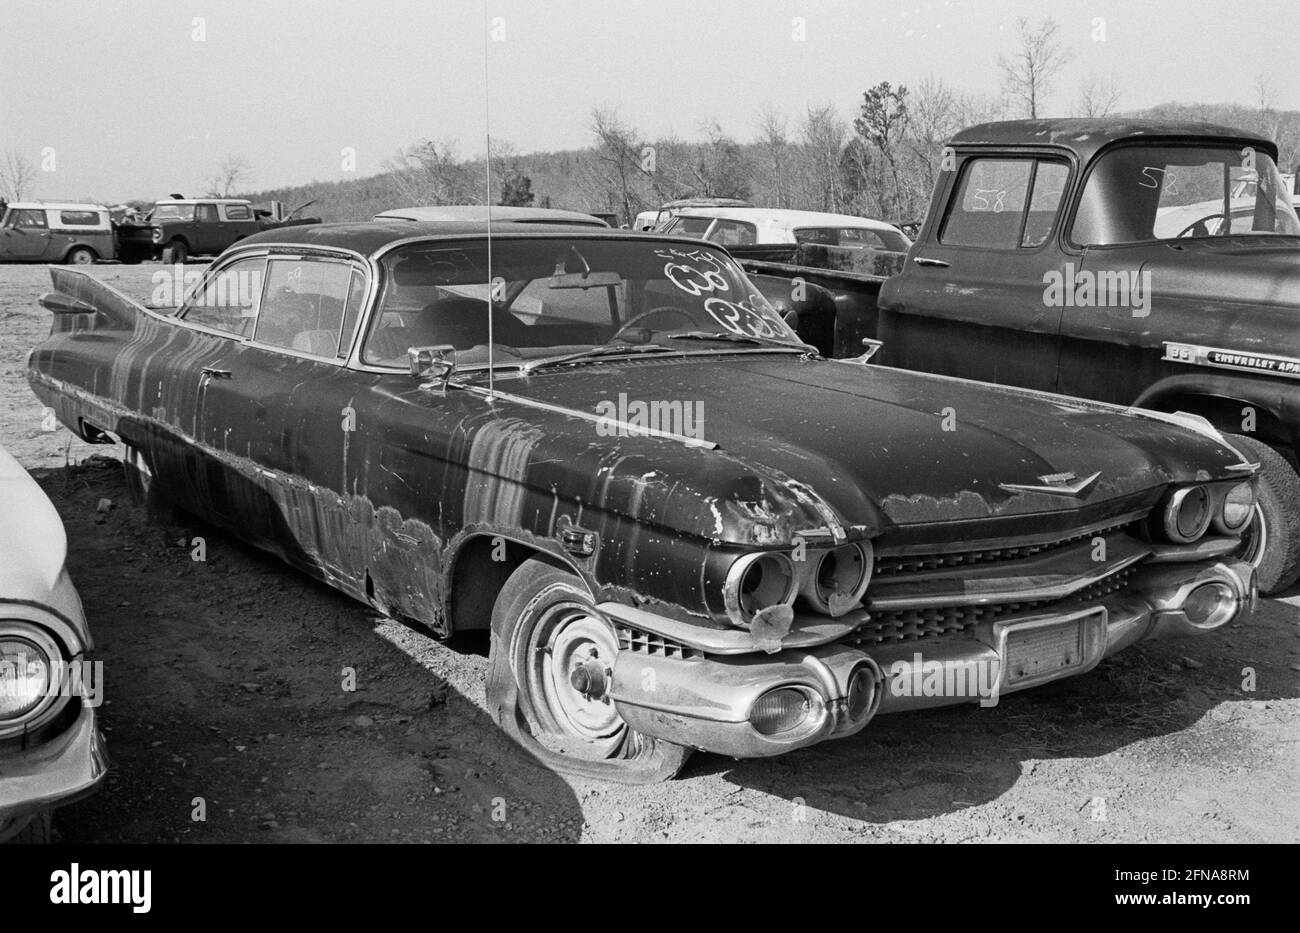 American Junkyard, 1959 Cadillac Stock Photo